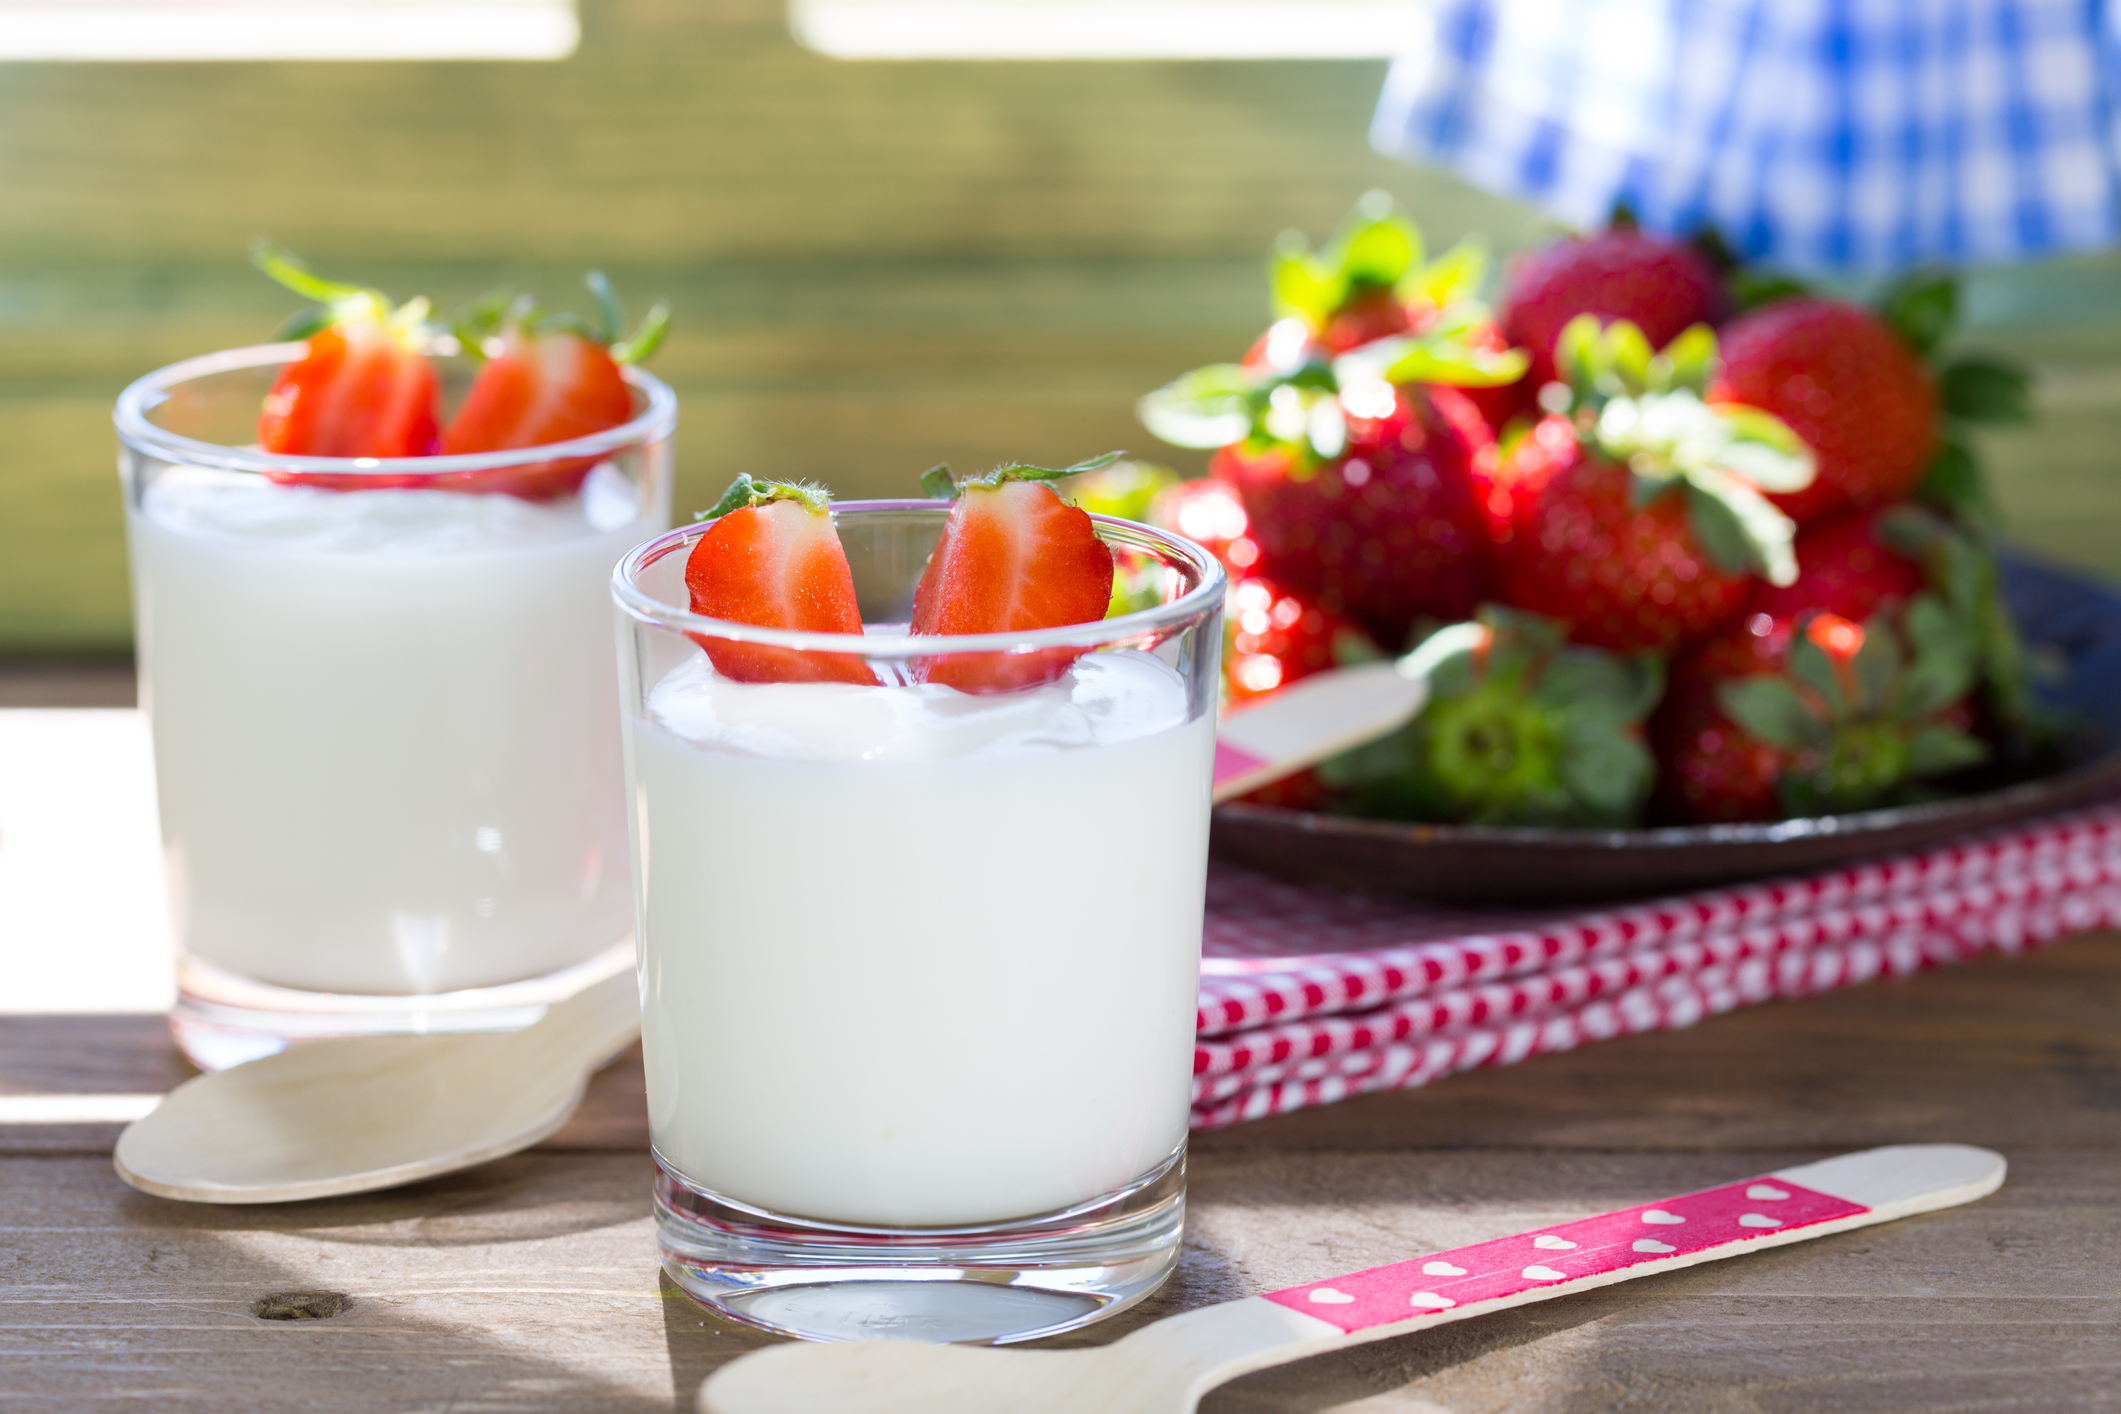 Yogurt lowers type 2 diabetes ri...